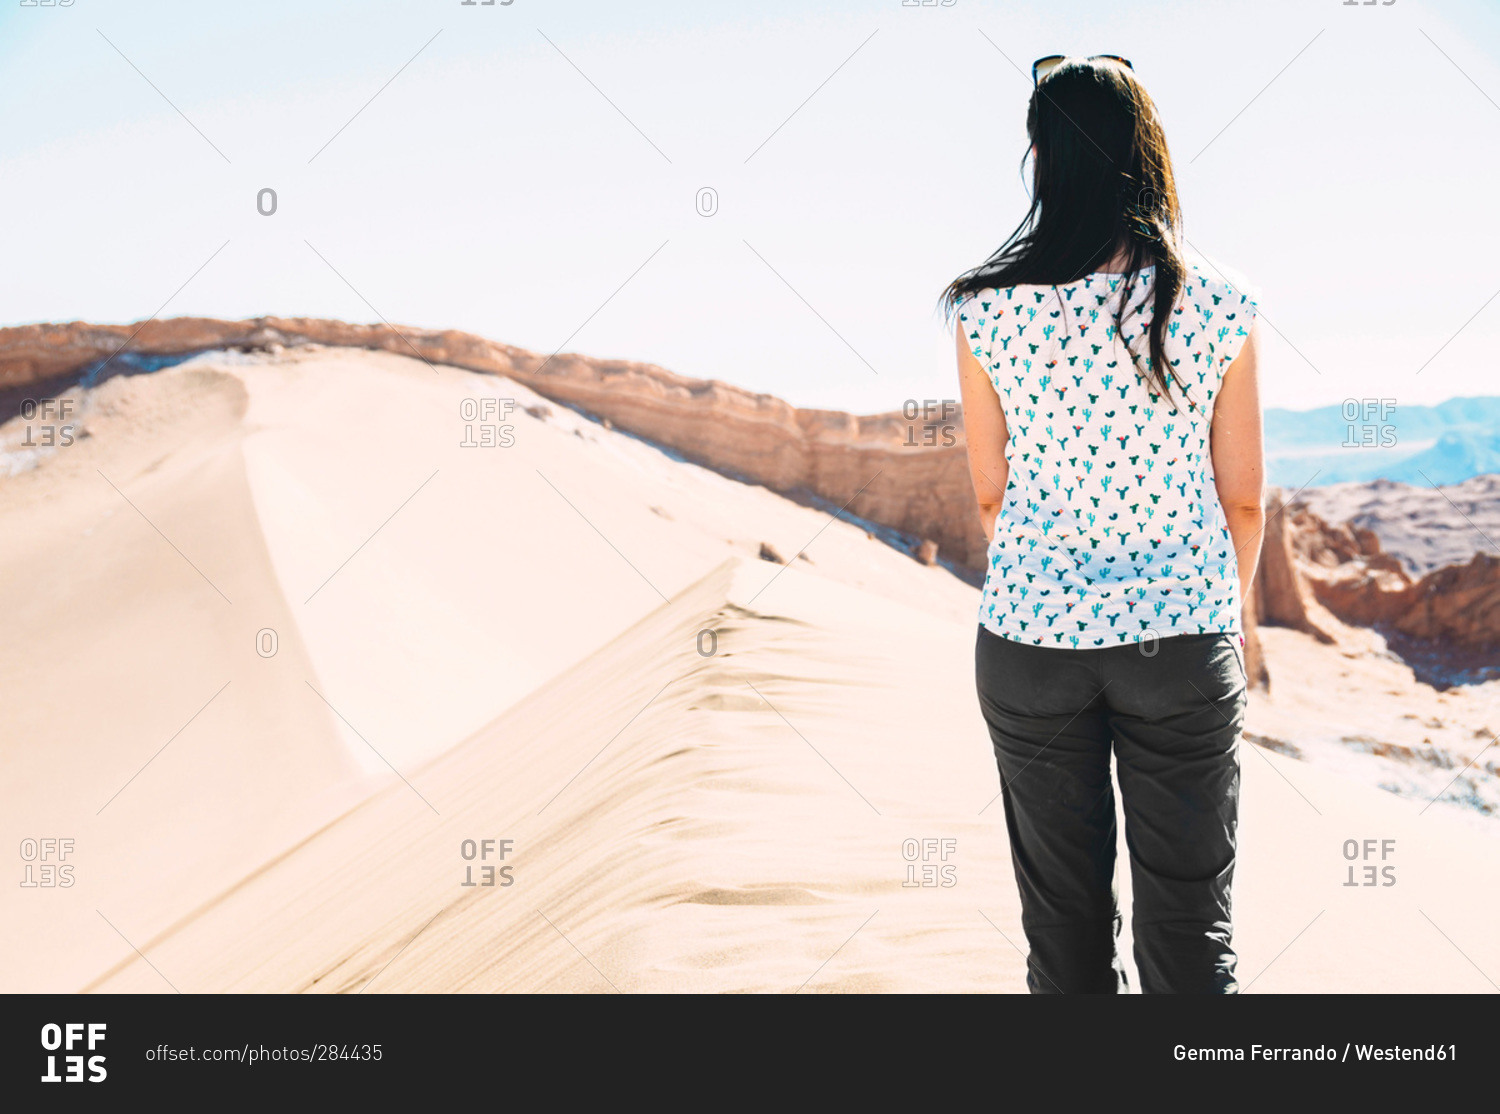 Woman standing on big dune looking at view, Atacama Desert